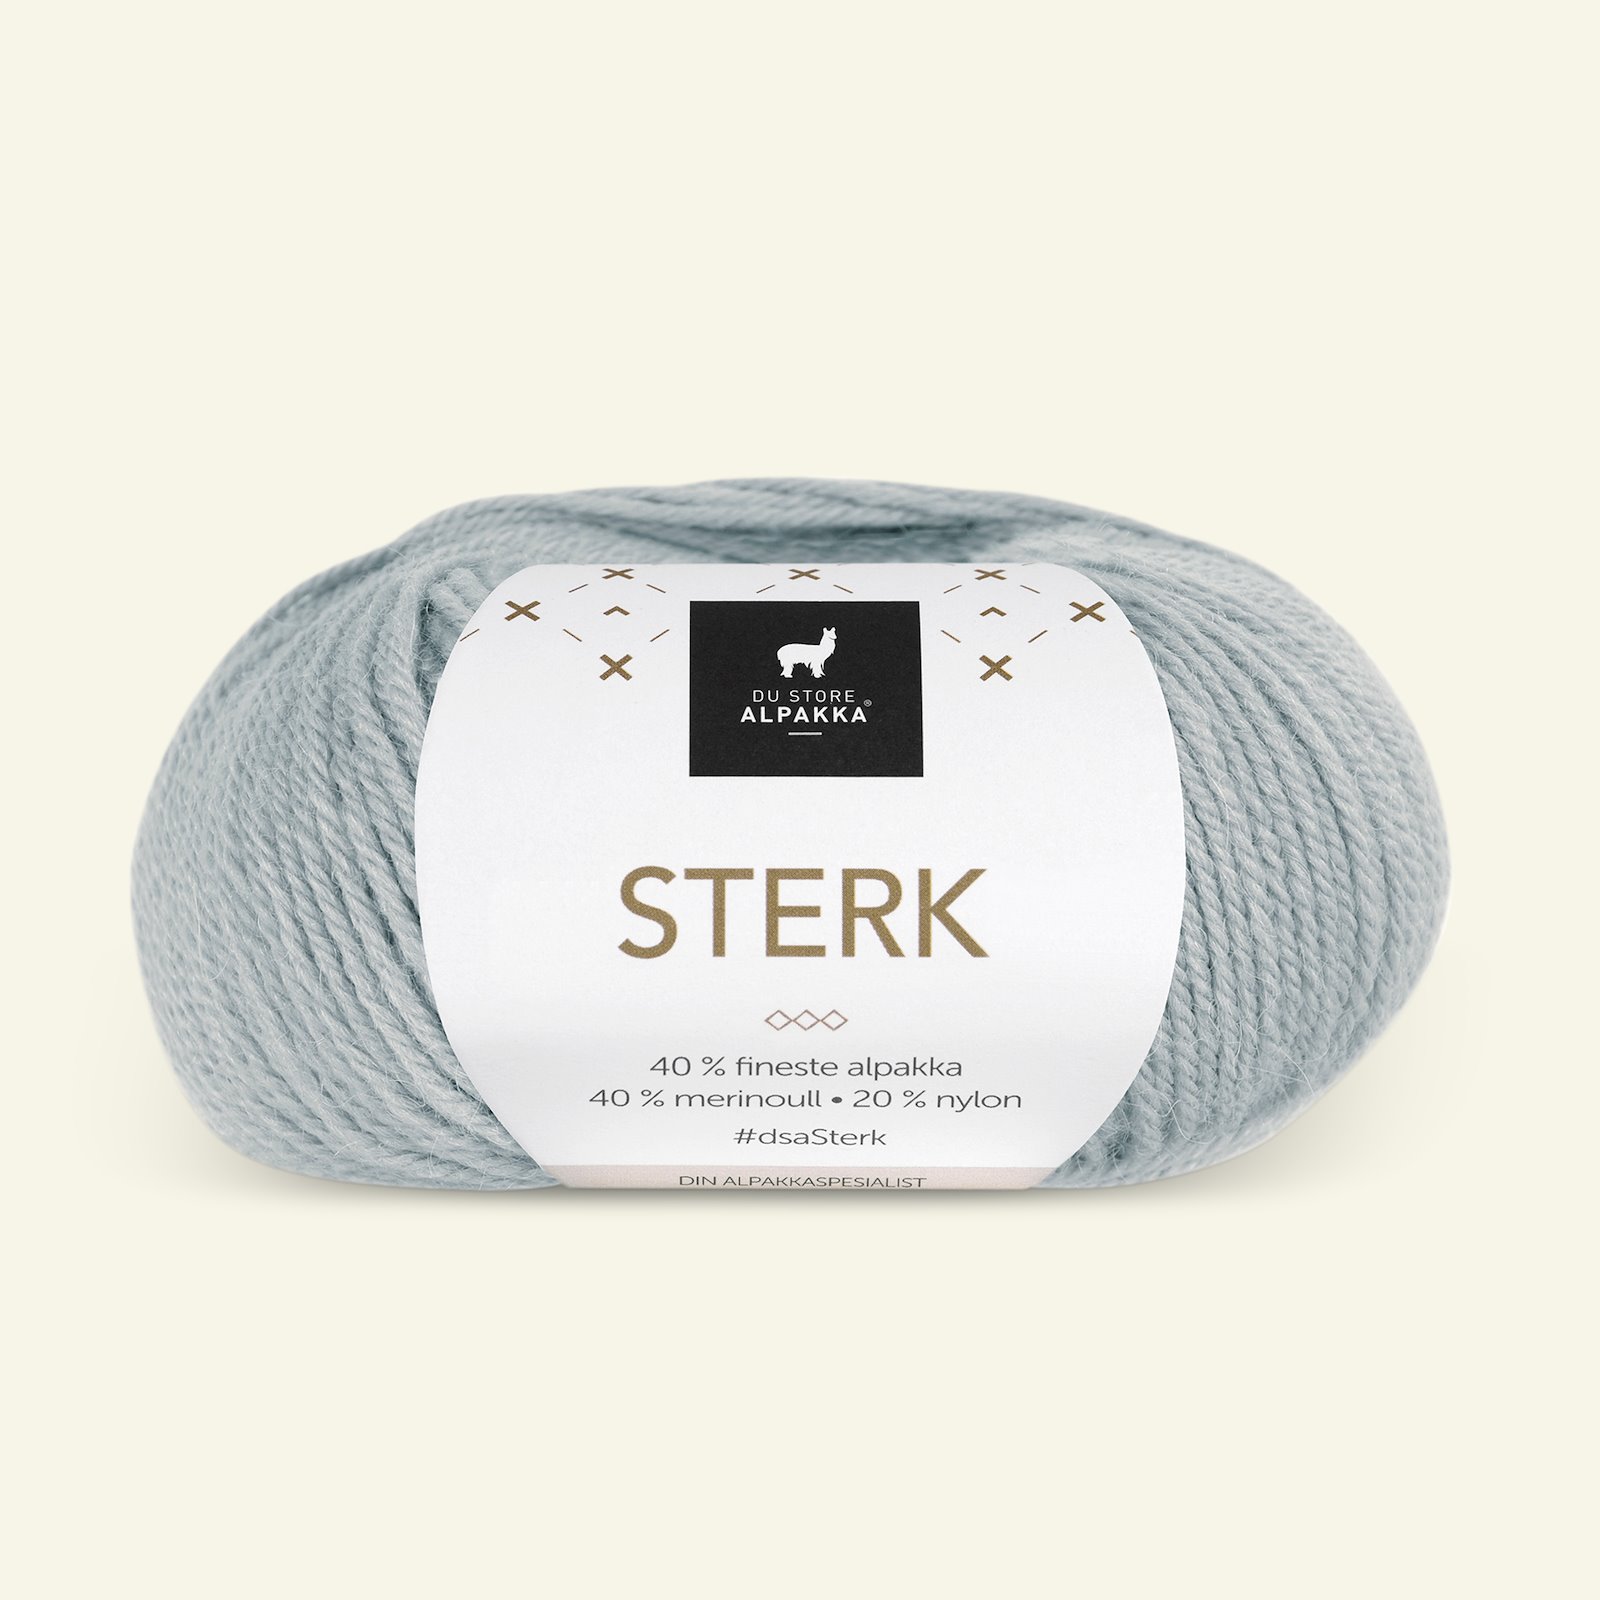 Du Store Alpakka, alpaca merino mixed yarn "Sterk", light blue (848) 90000675_pack